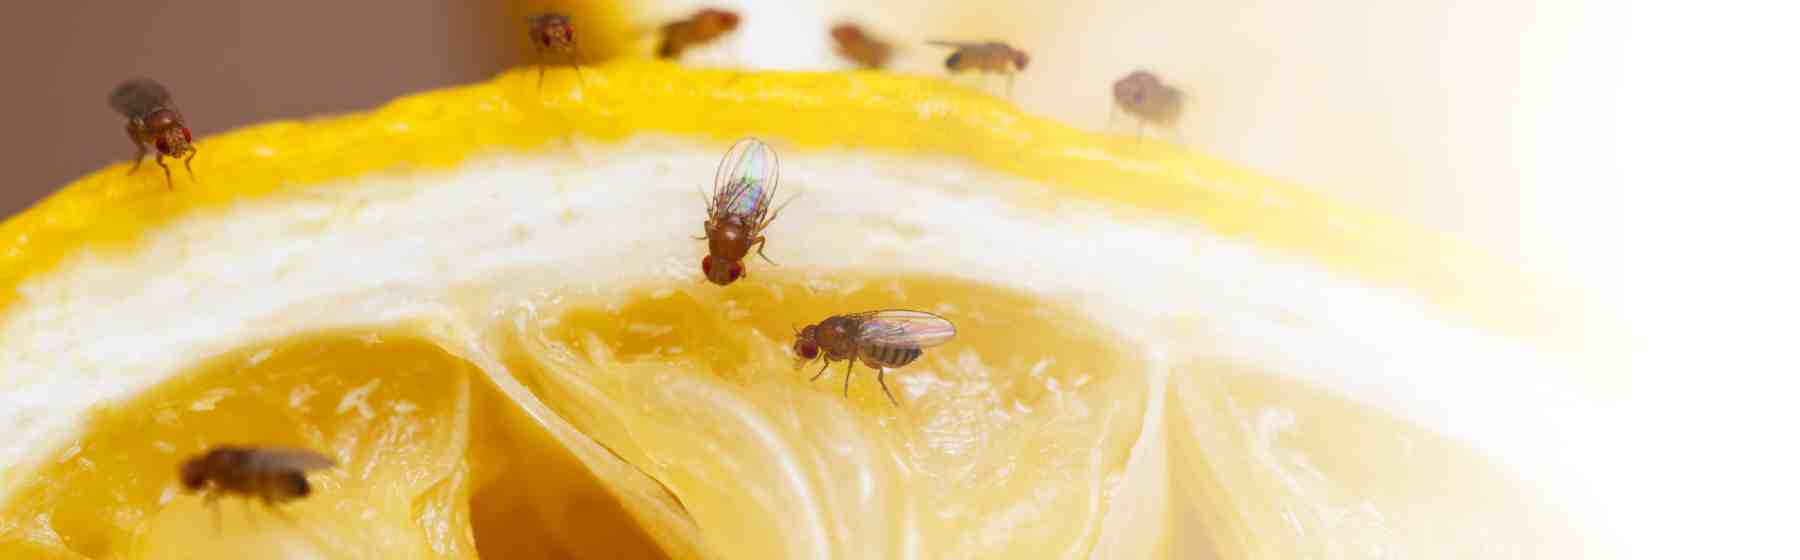 fruit flies blended with orange,